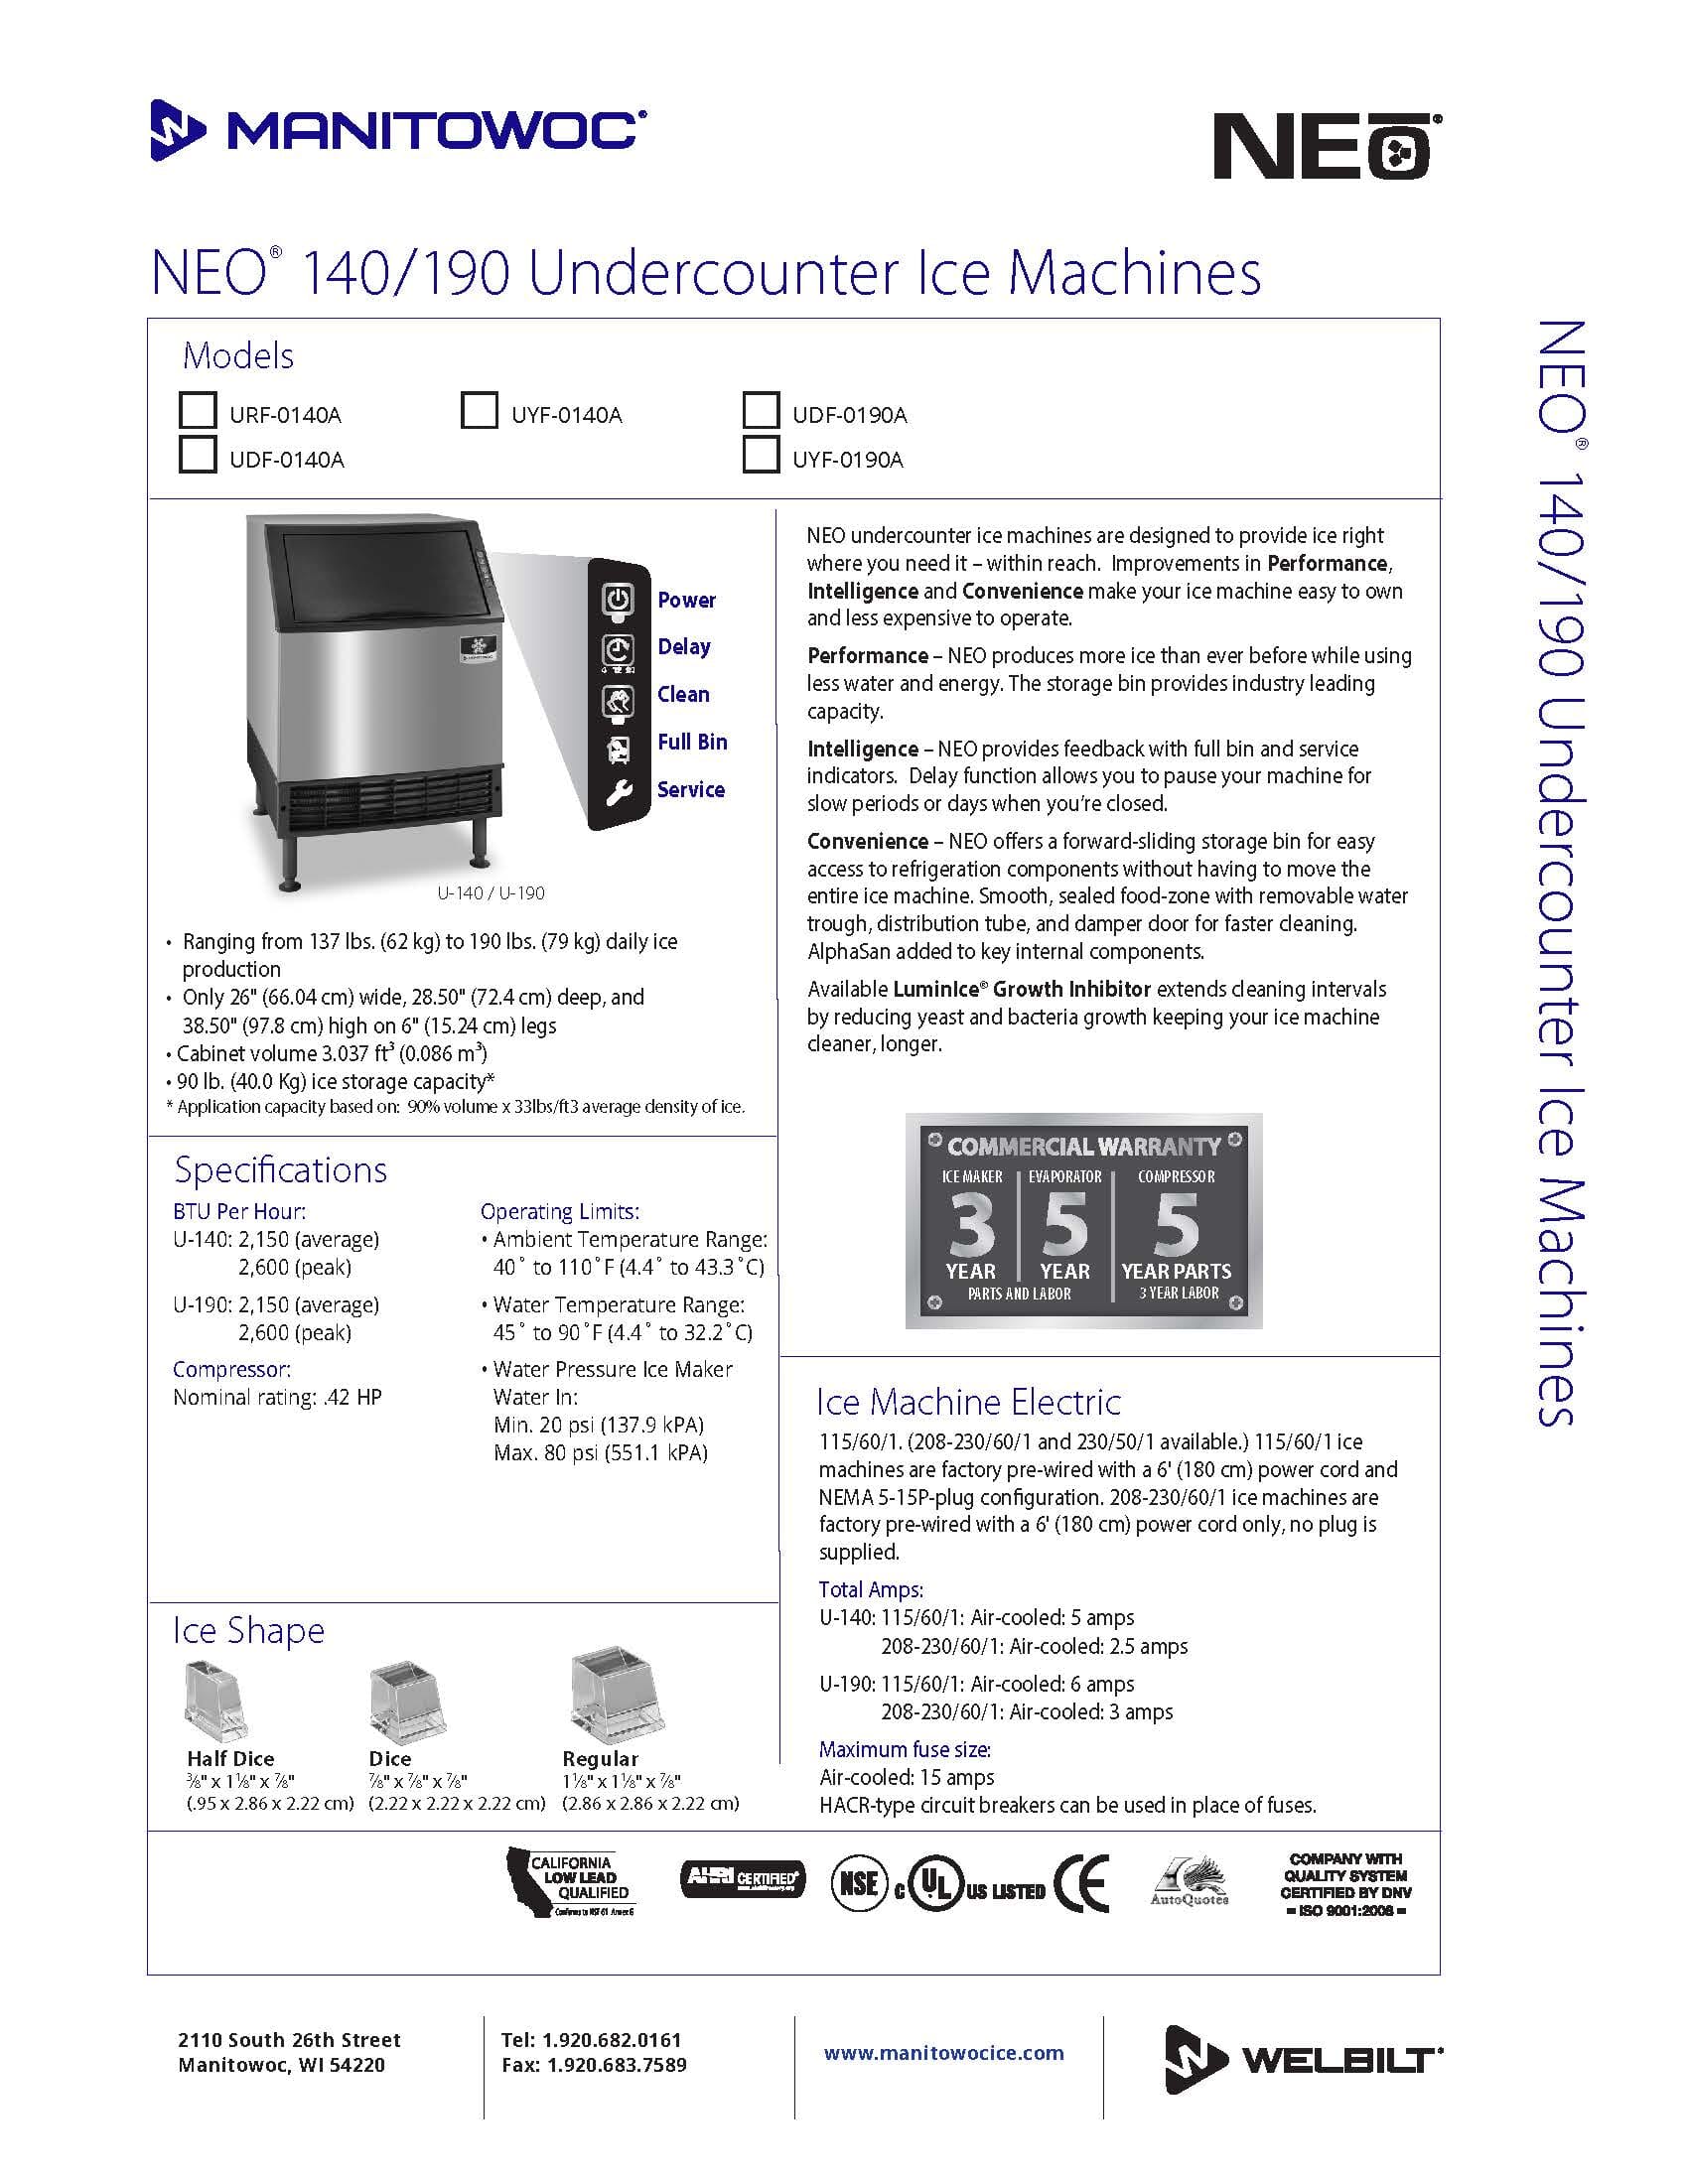 Manitowoc - UYF0190A-161B - Undercounter Ice Machine, Half Diced, Air Cooled, 115/1/60, Breaker Manitowoc 